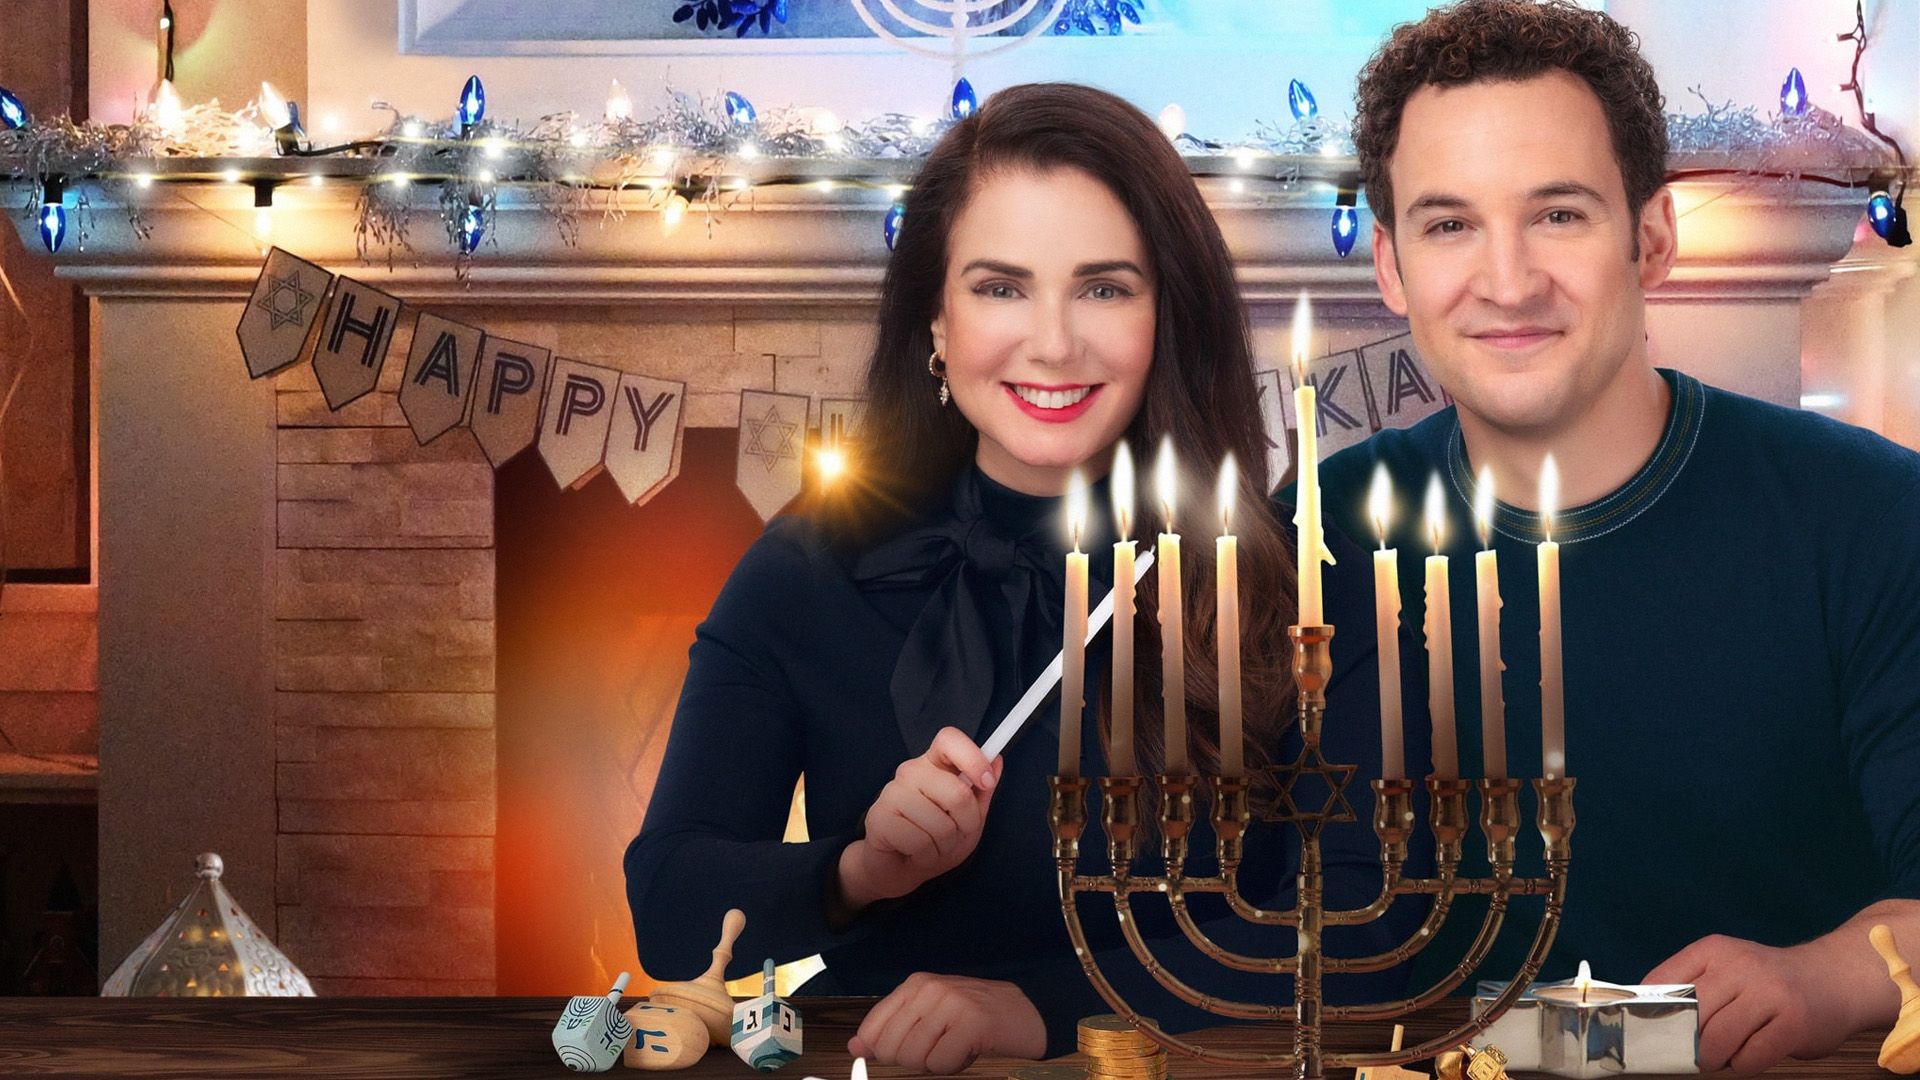 Love, Lights, Hanukkah! background